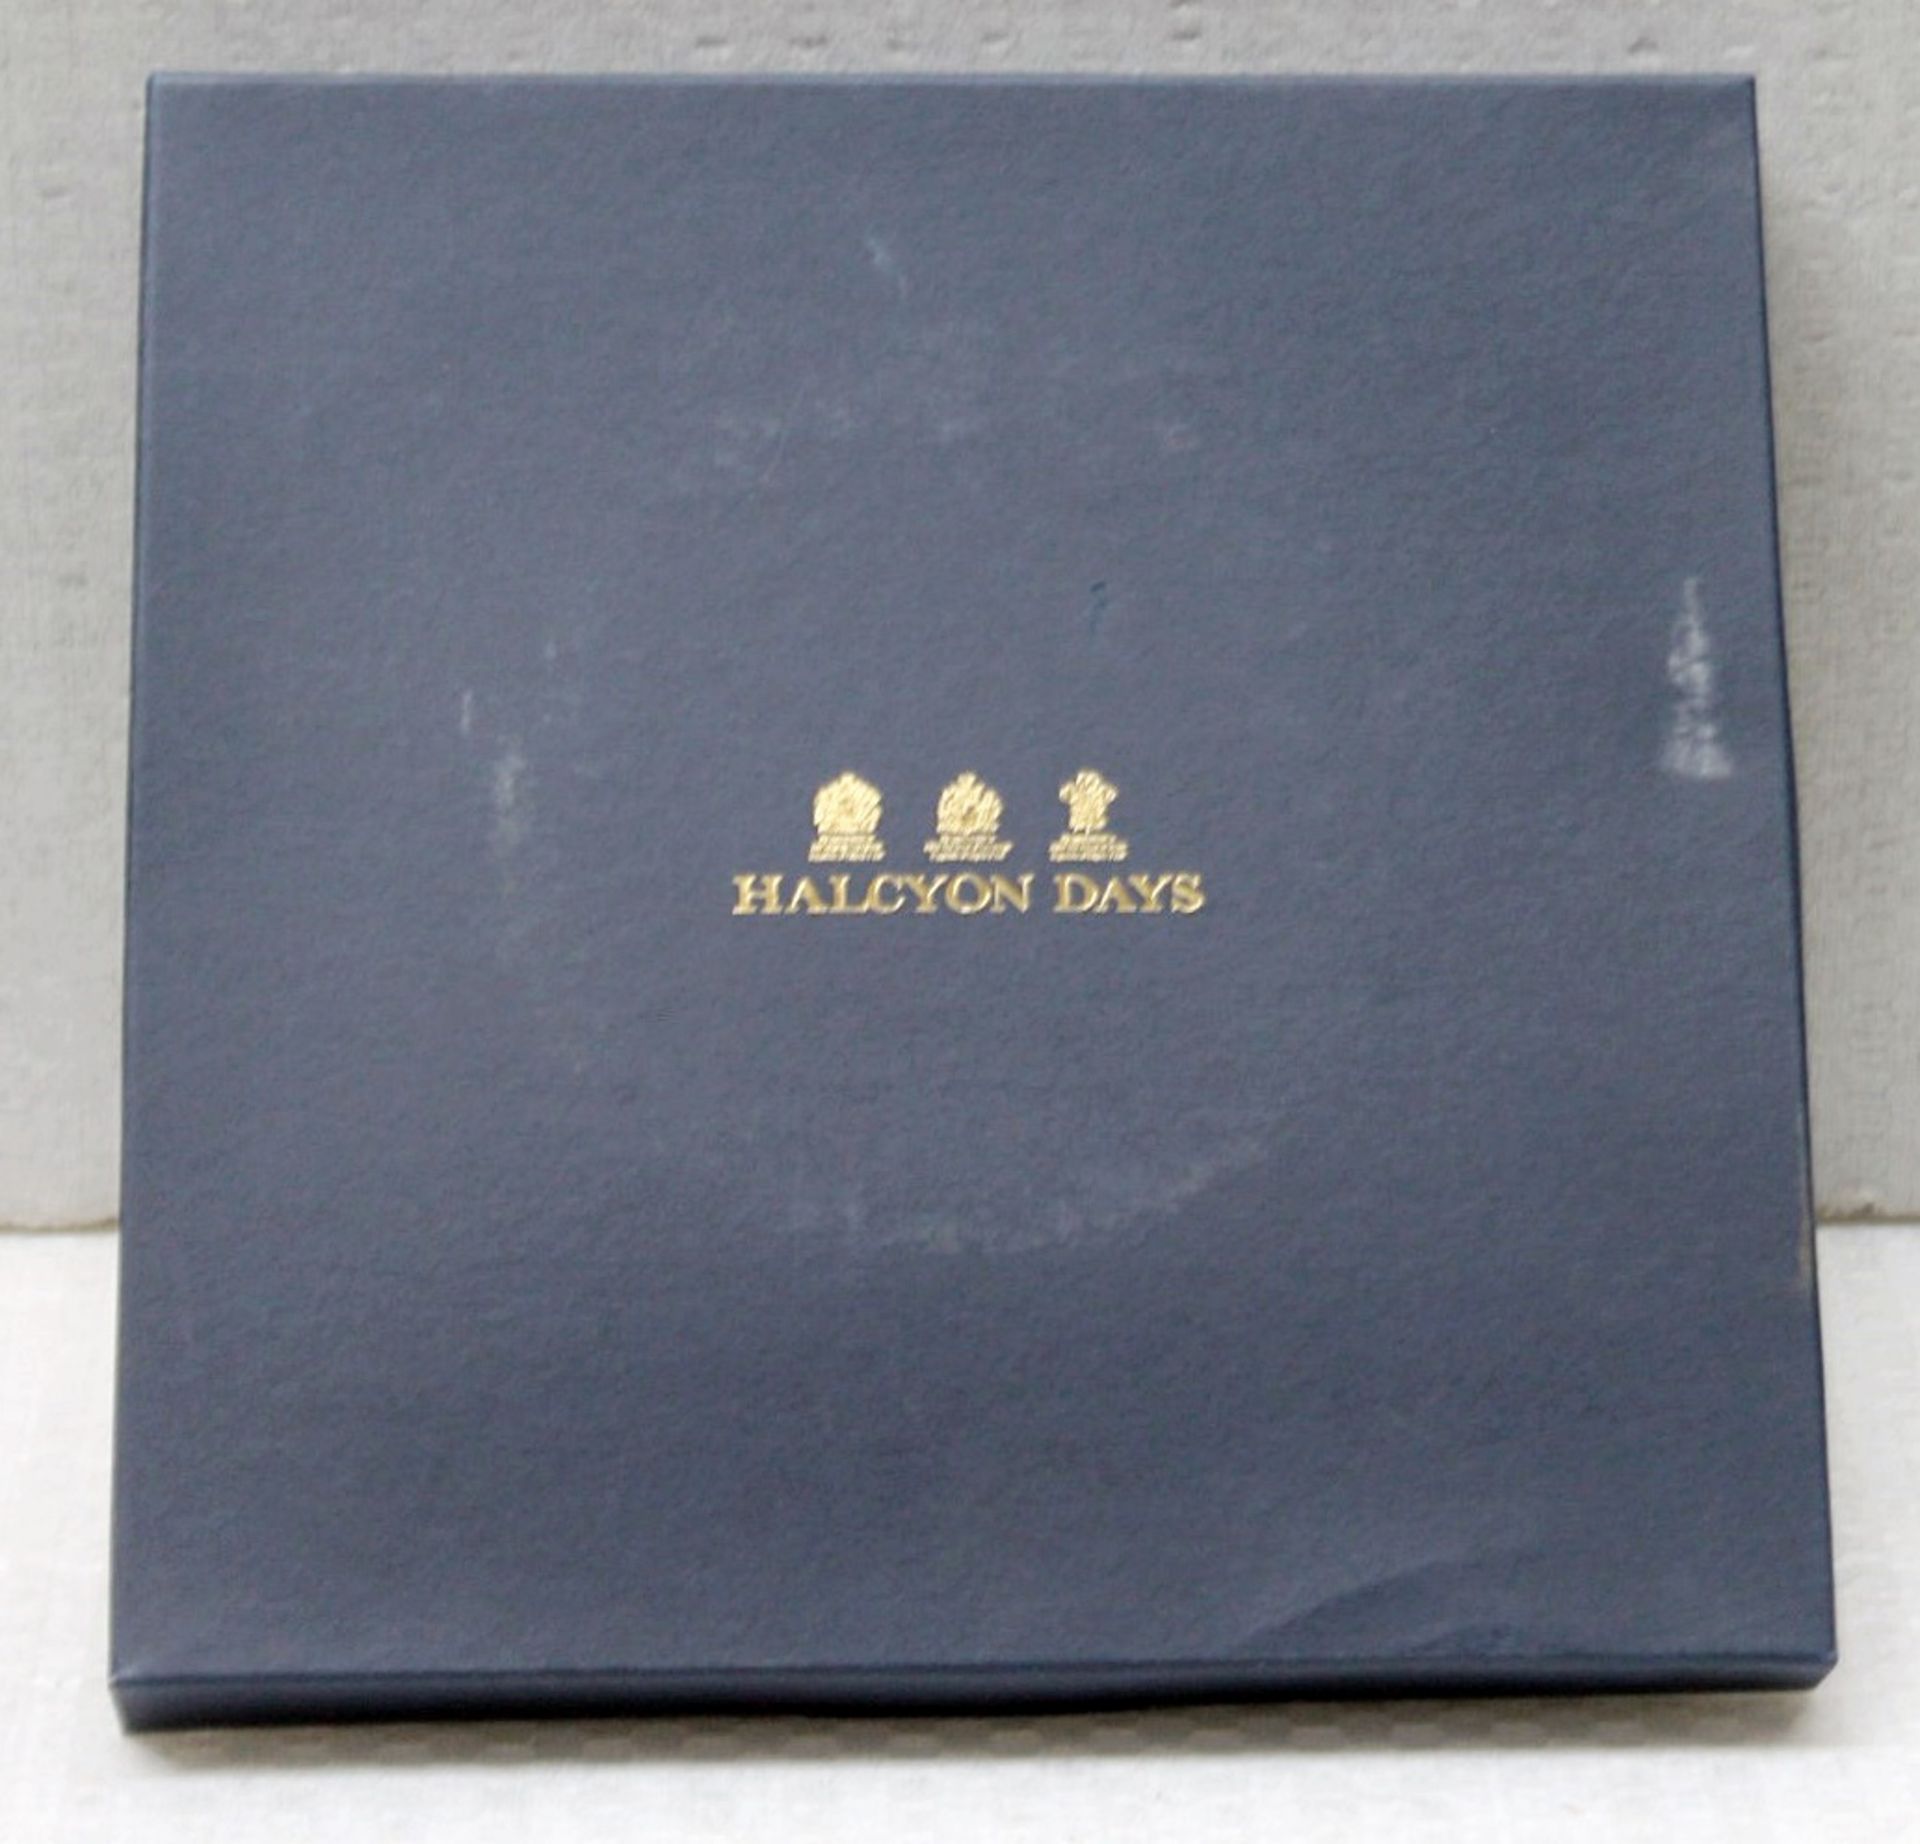 1 x HALCYON DAYS Bone China Platinum Jubilee Presentation Plate (26cm) - Original Price £150.00 - Image 5 of 9